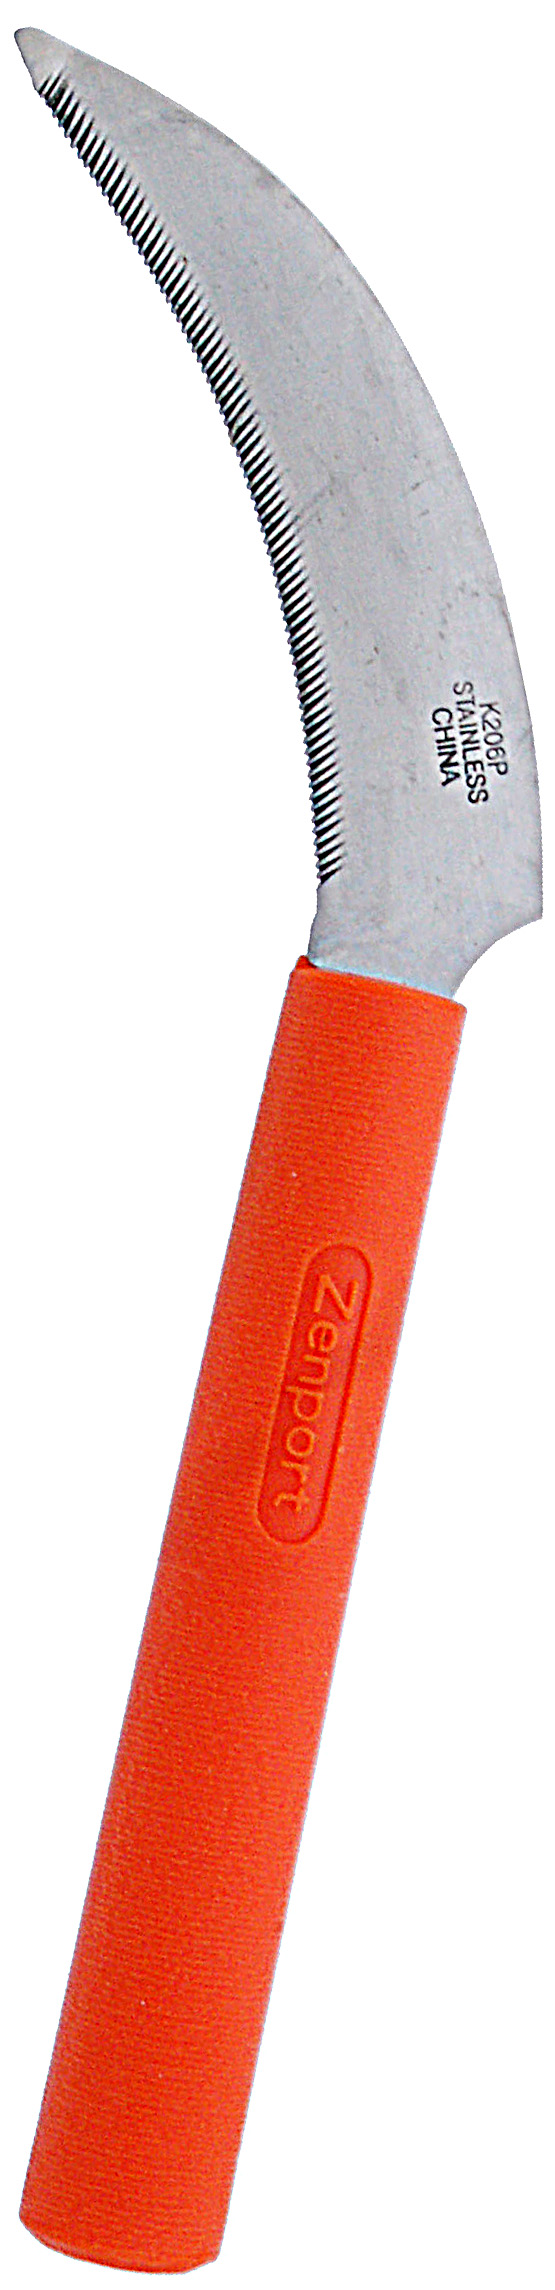 Sickle K206C Berry Knife/Weeding, Orange Plastic Handle, A+ Grade, Stainless Steel, Light Serration, 4.3-Inch Blade